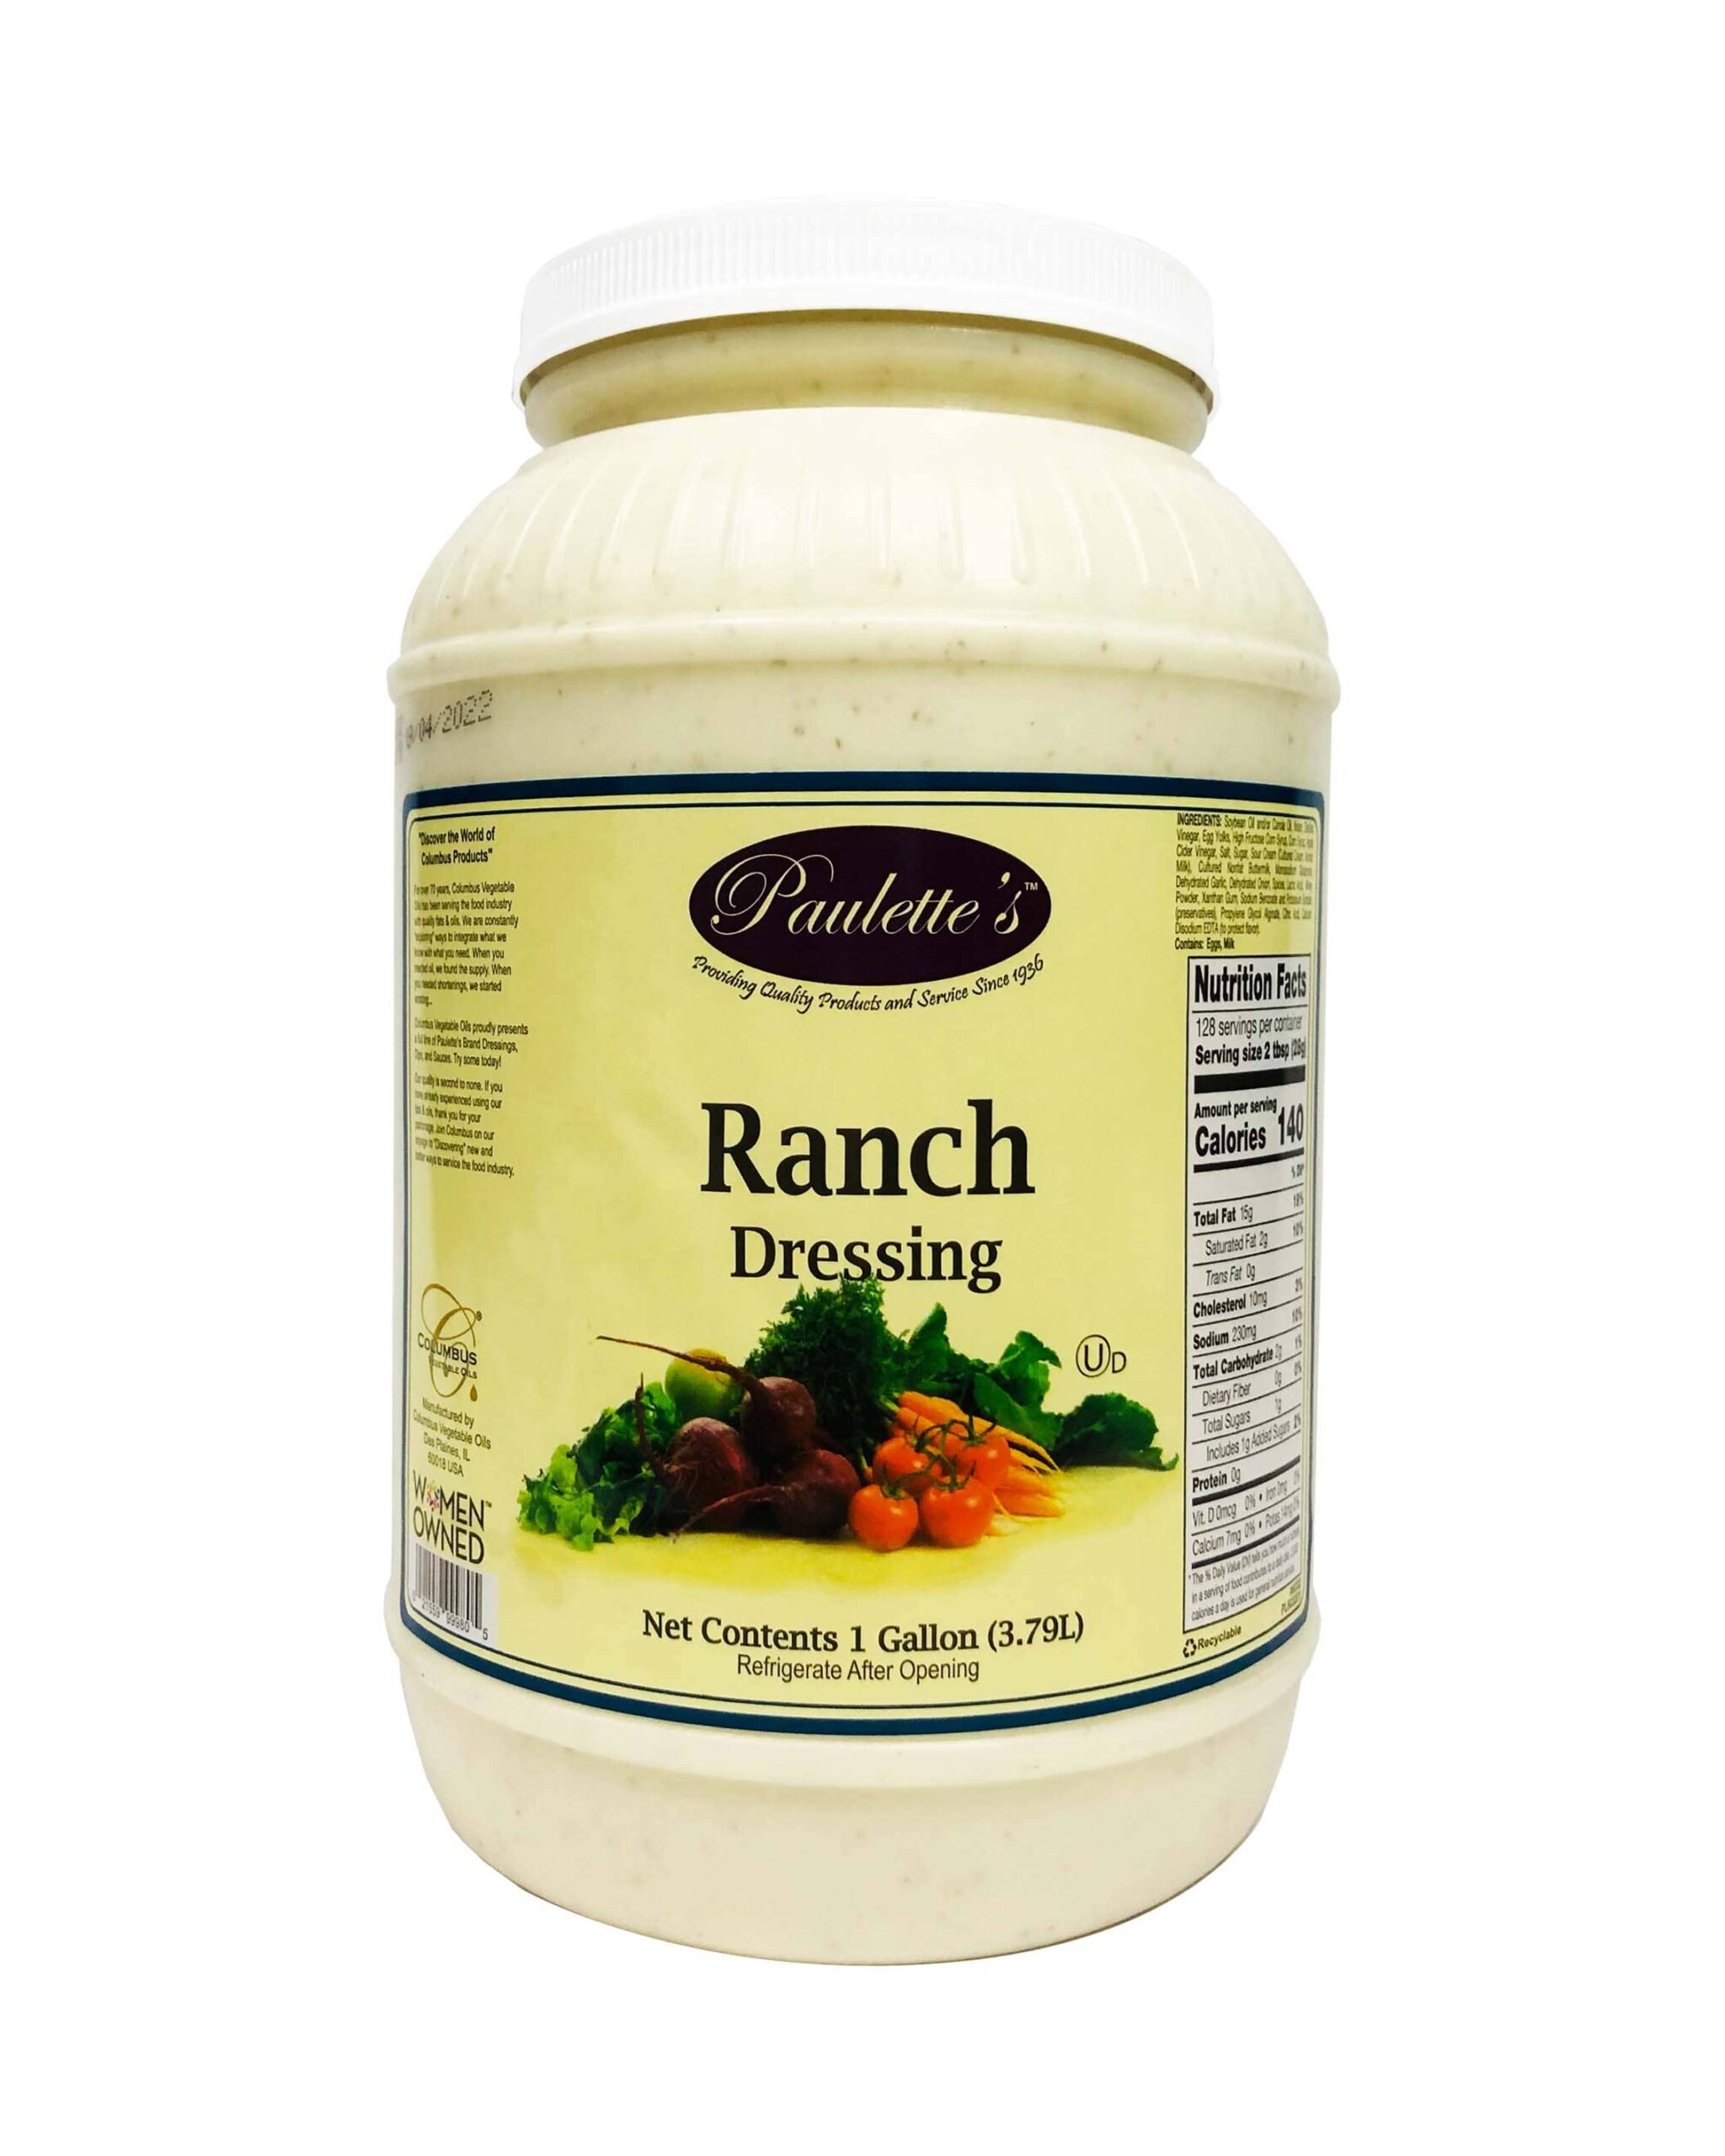 Aderezo Ranch – Ciemsa Foodservice